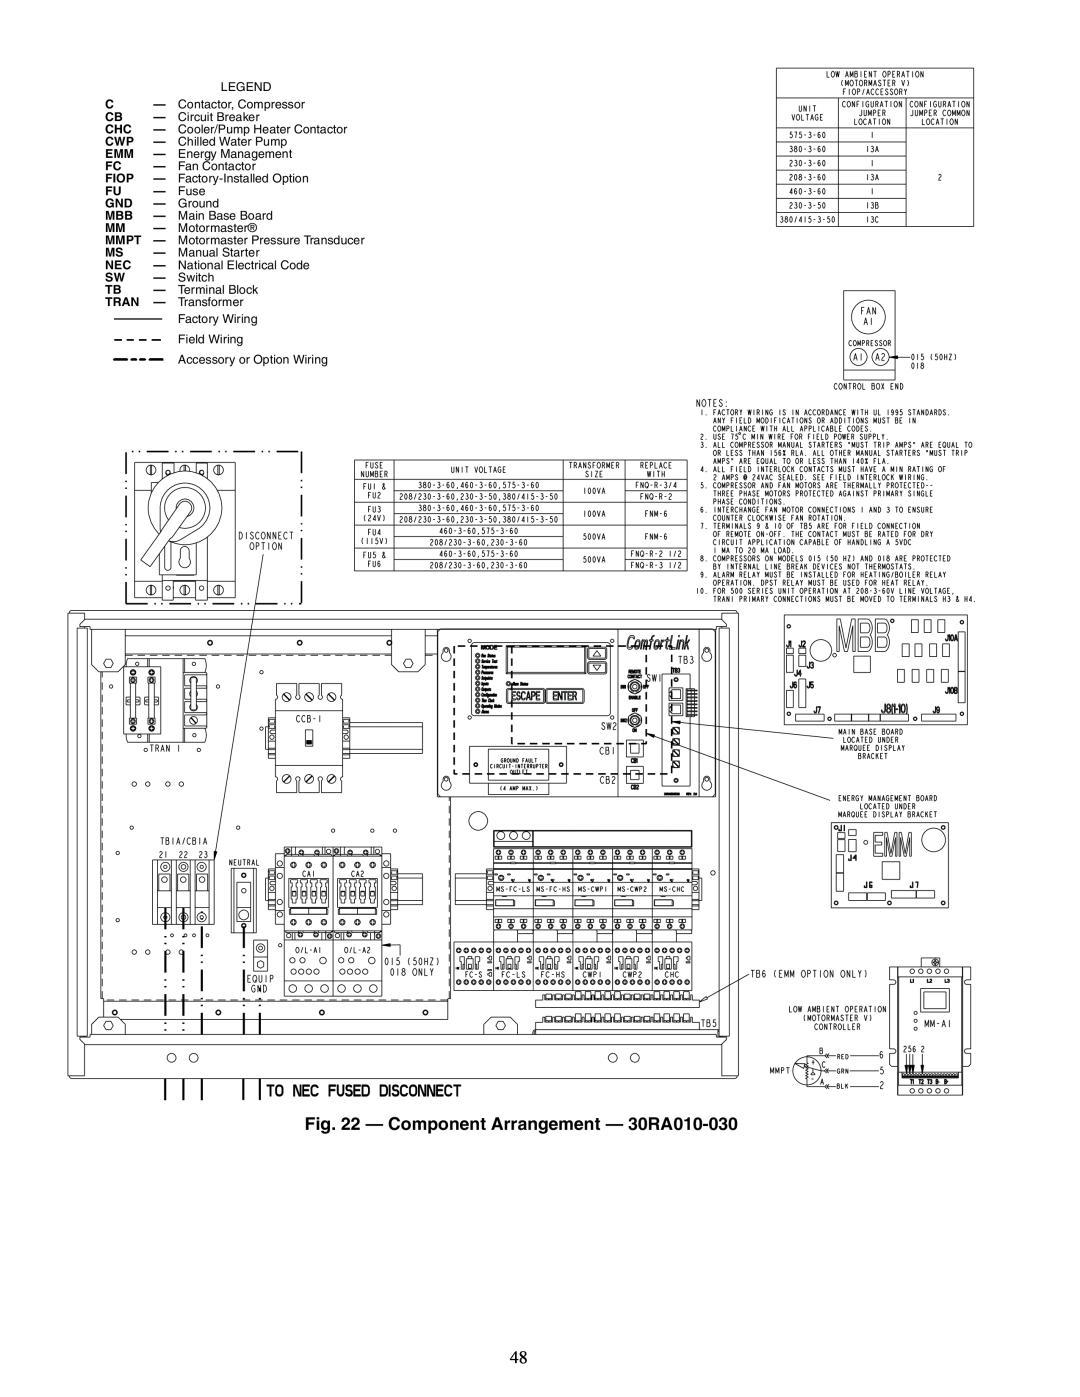 Sterling 30RA010-055 manual Component Arrangement — 30RA010-030, FU — Fuse GND — Ground 